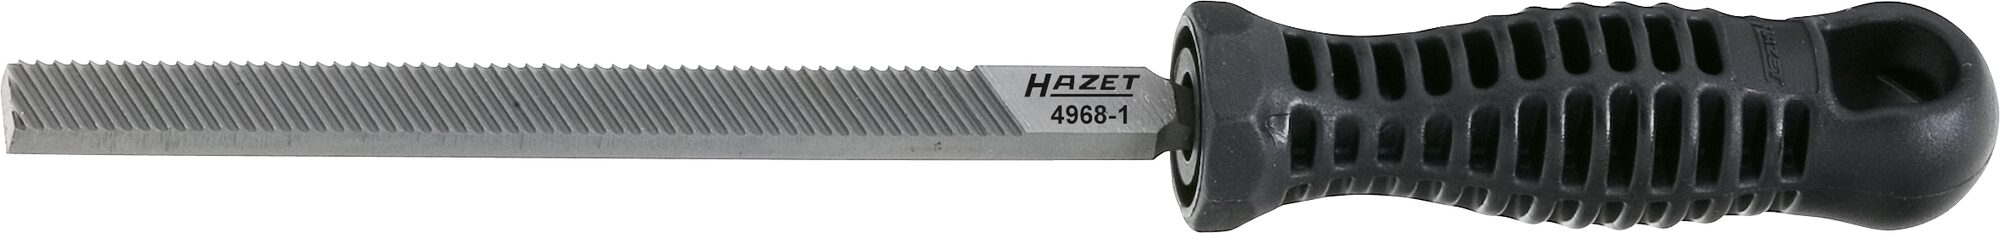 HAZET Bremssattel-Feile 4968-1 ∙ 260 mm